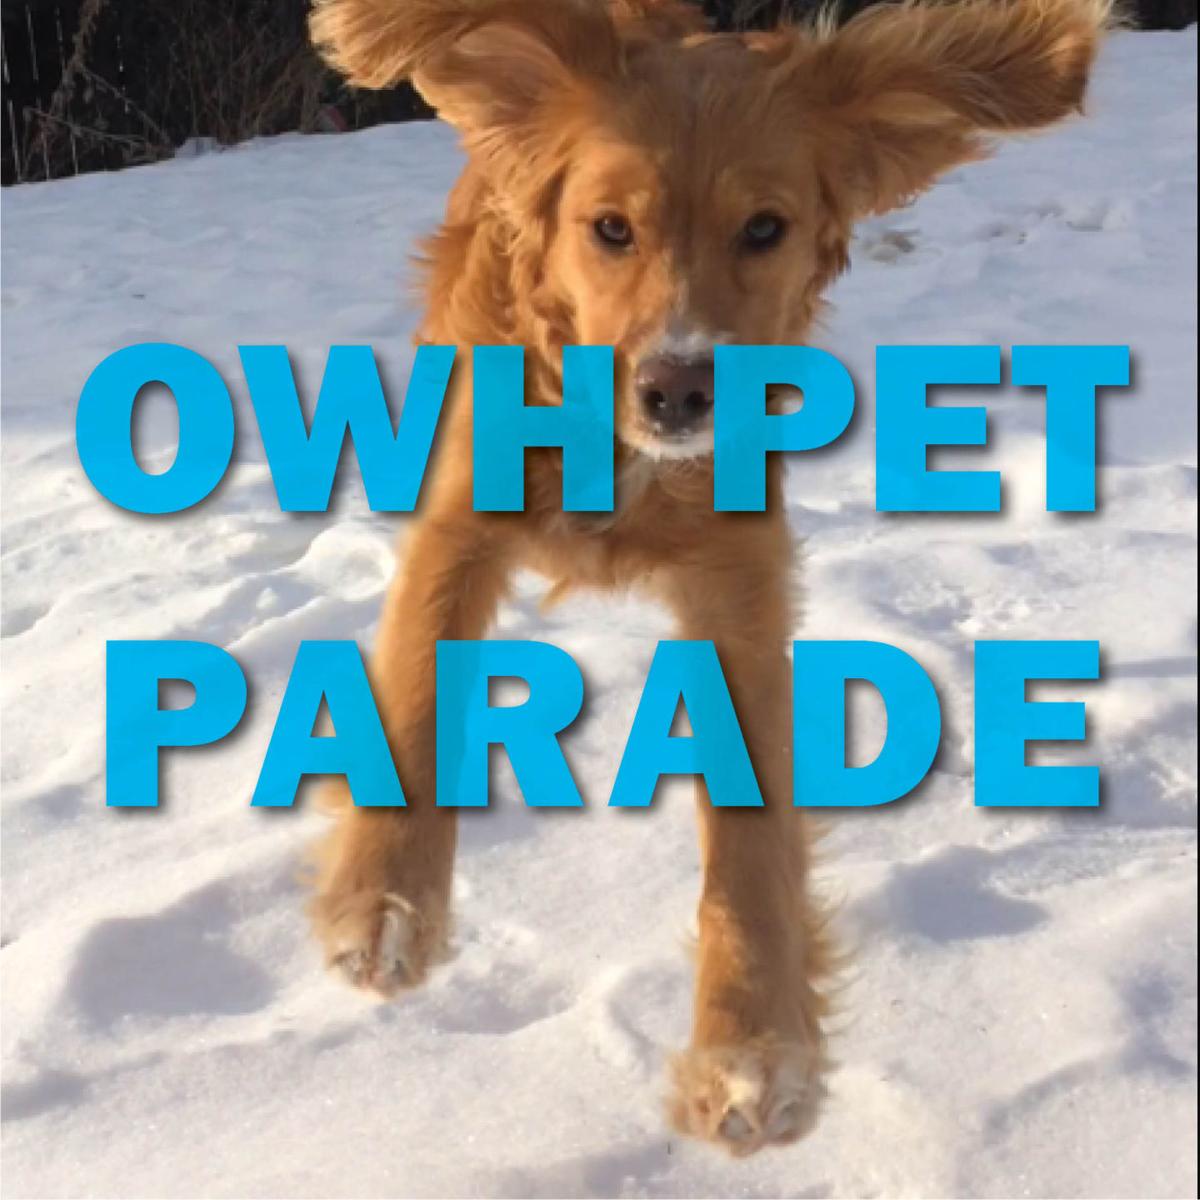 Follow Pet Parade on Twitter